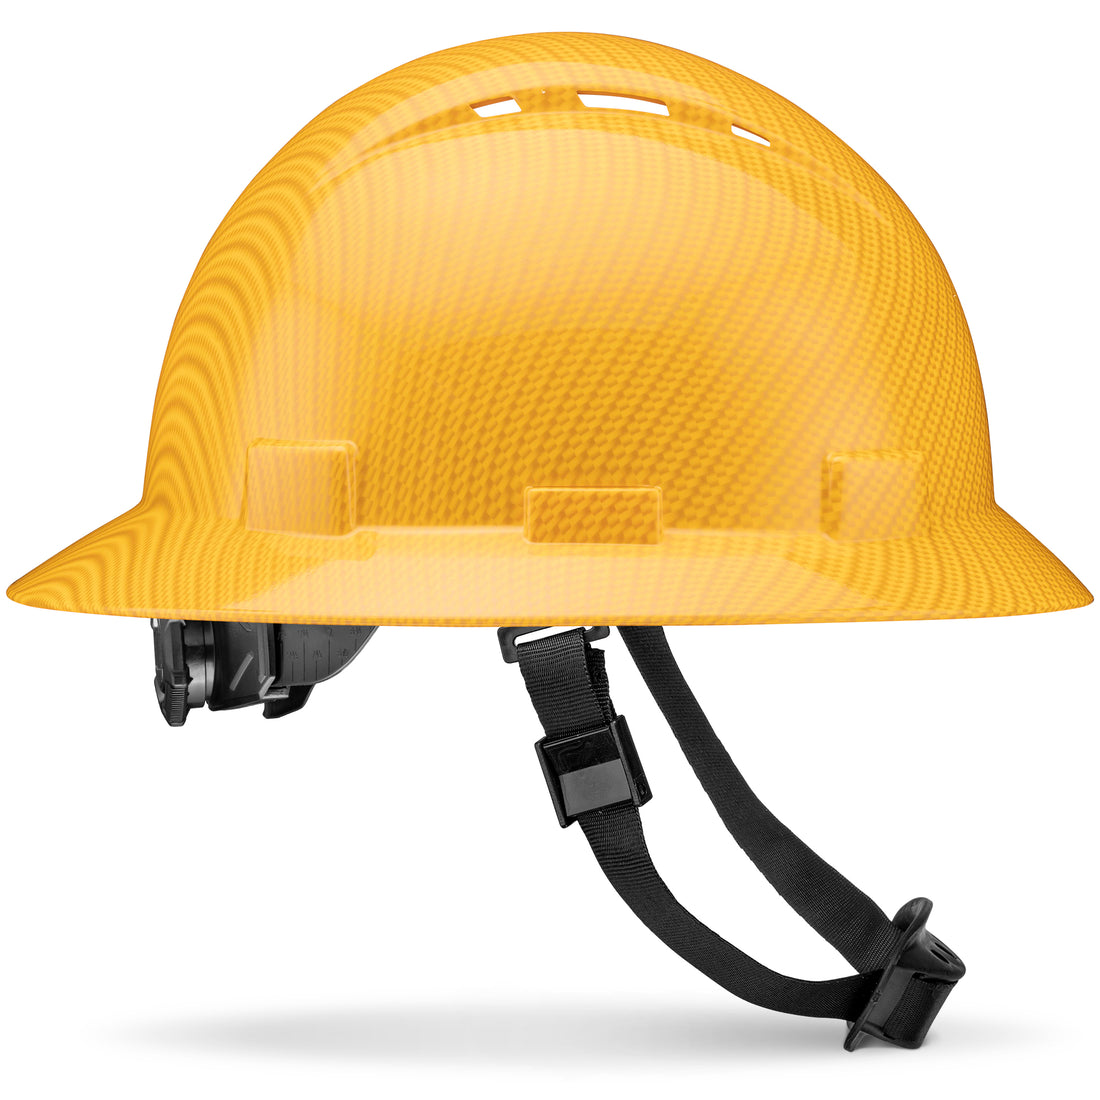 Full Brim Yellow Textured Carbon Fiber Design Gloss Finish Vented Hard Hat